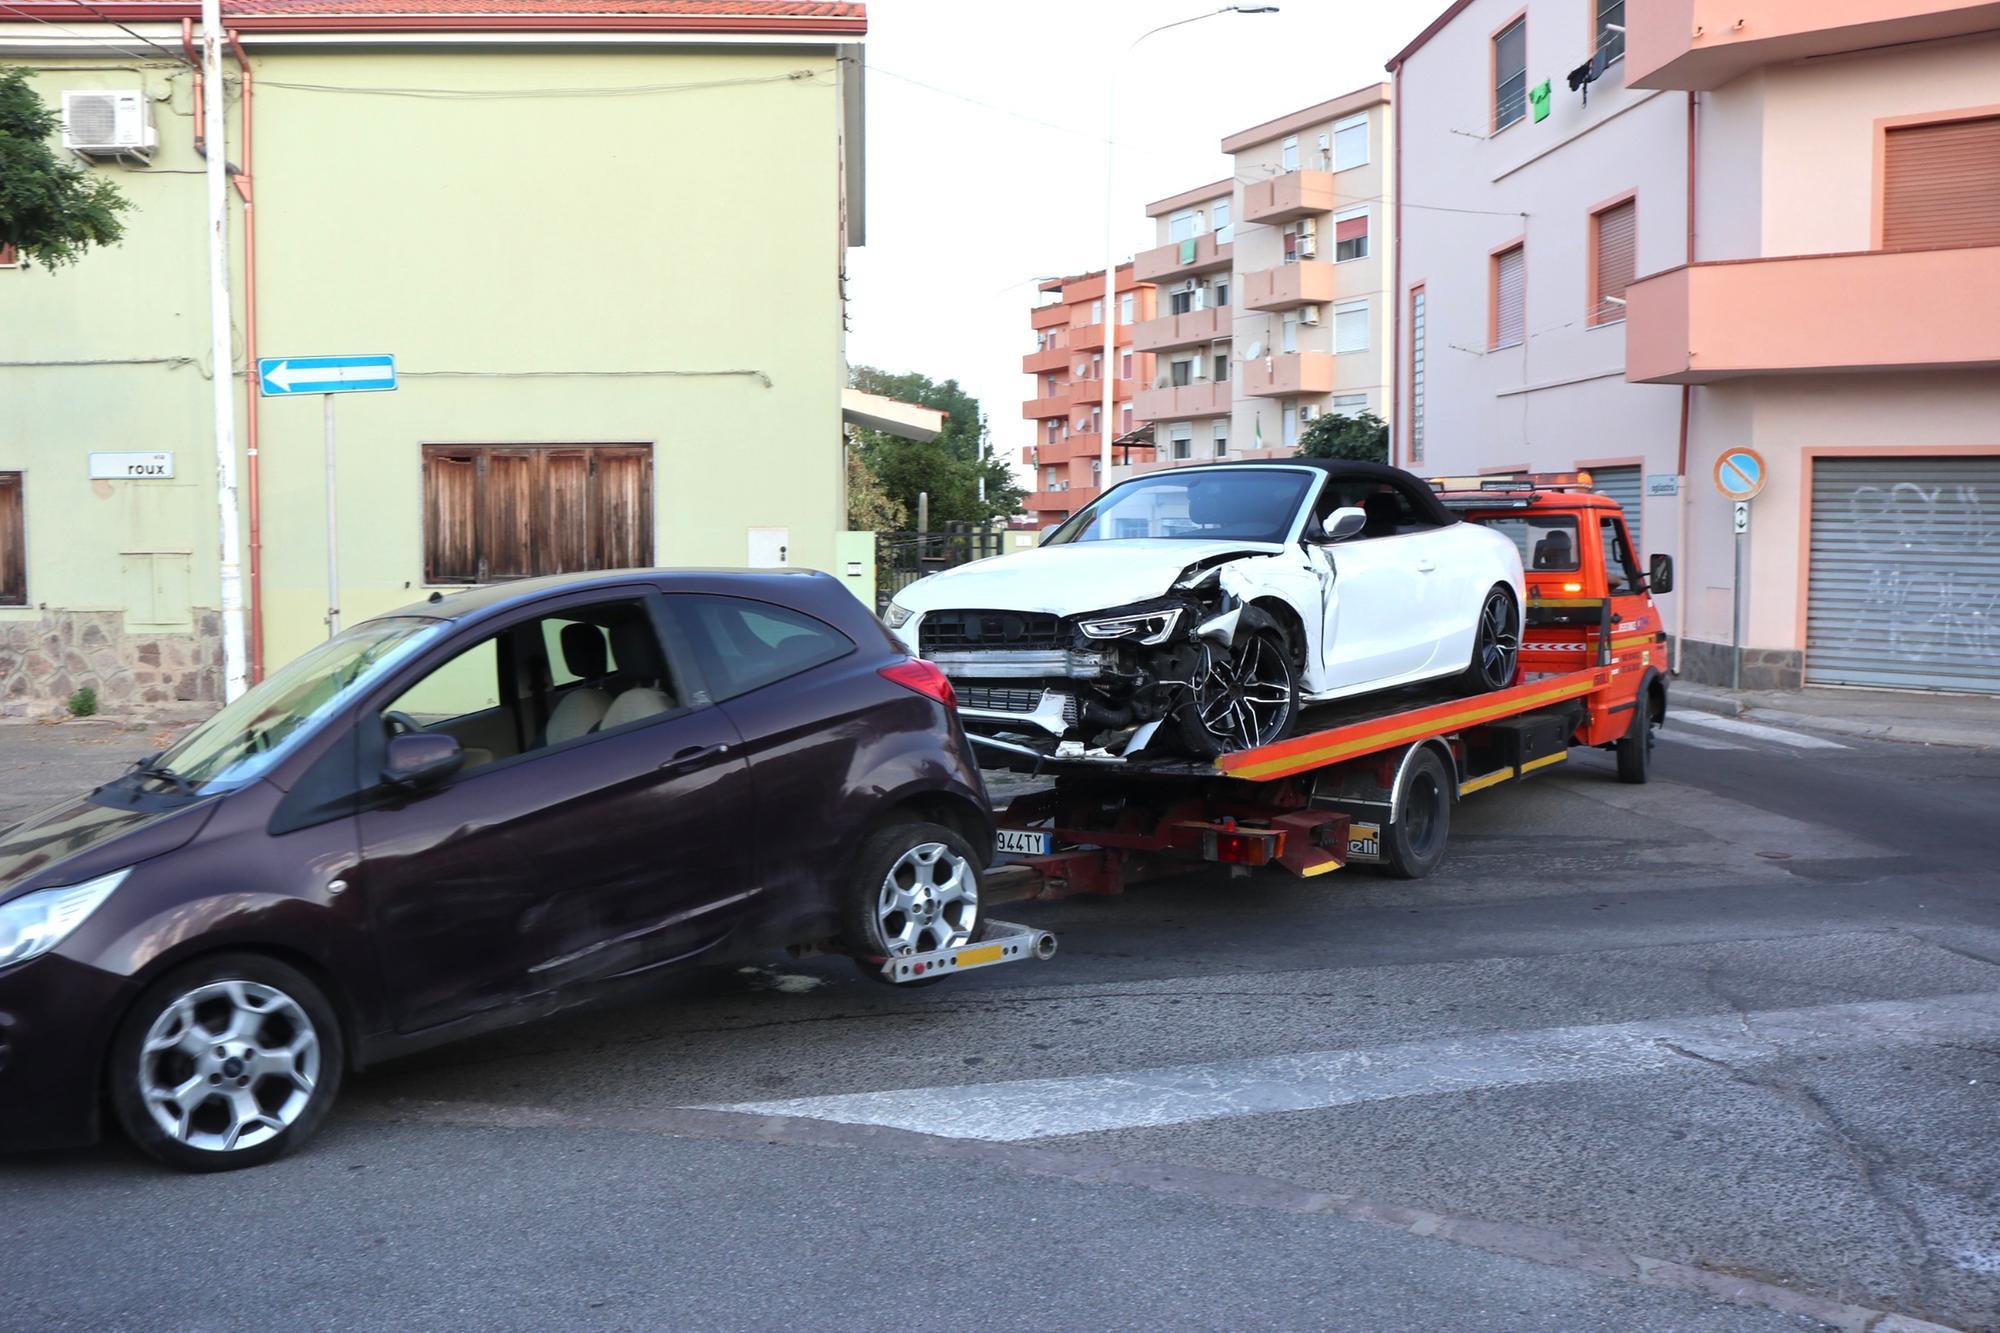 La Ford Ka e l'Audi danneggiate (L'Unione Sarda - Murru)